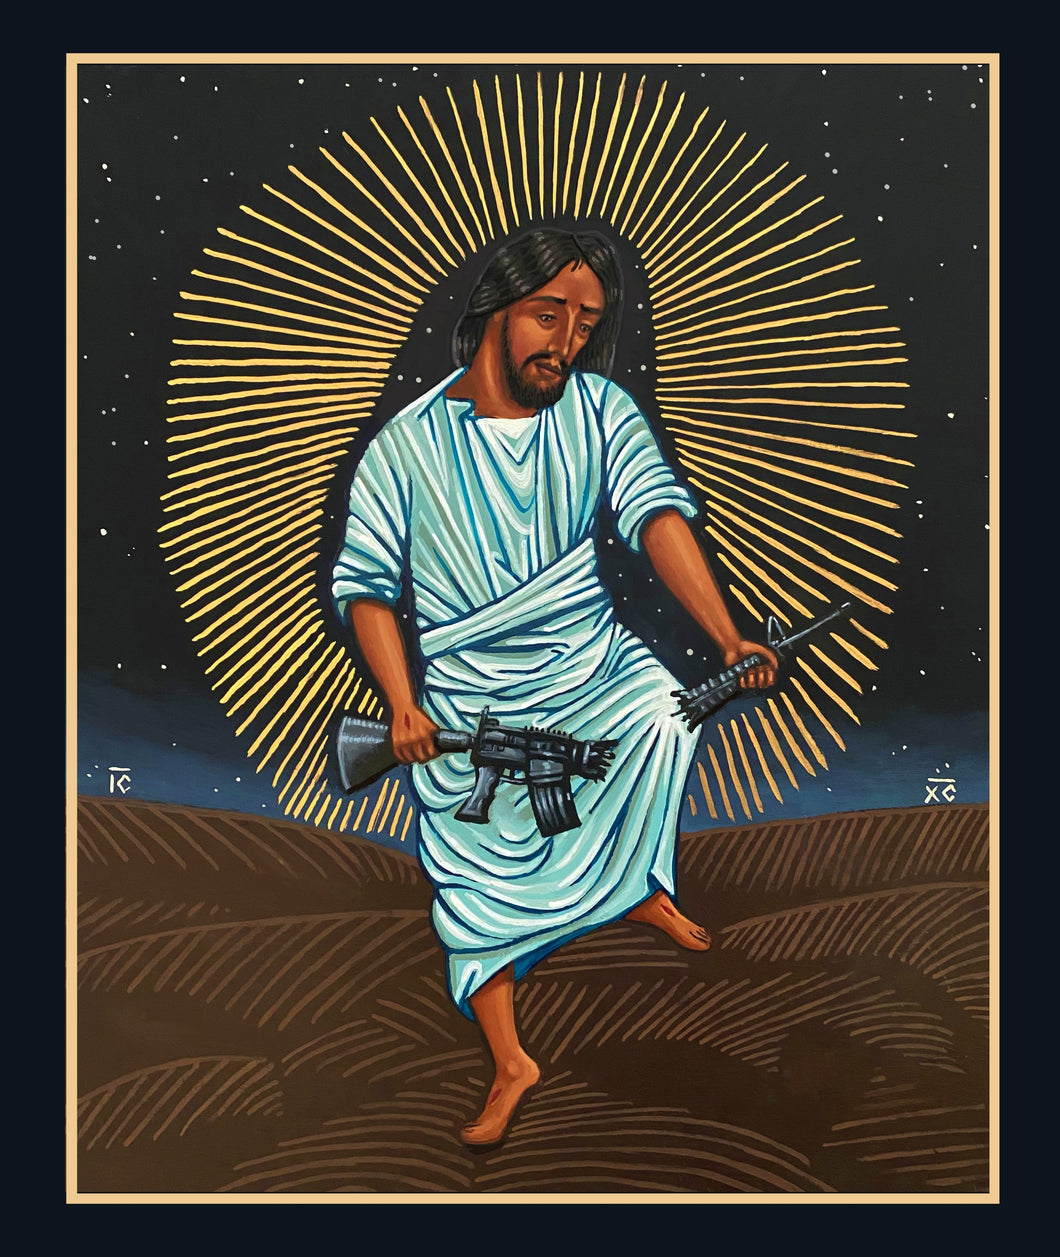 Christ Breaks the Rifle Digital Image